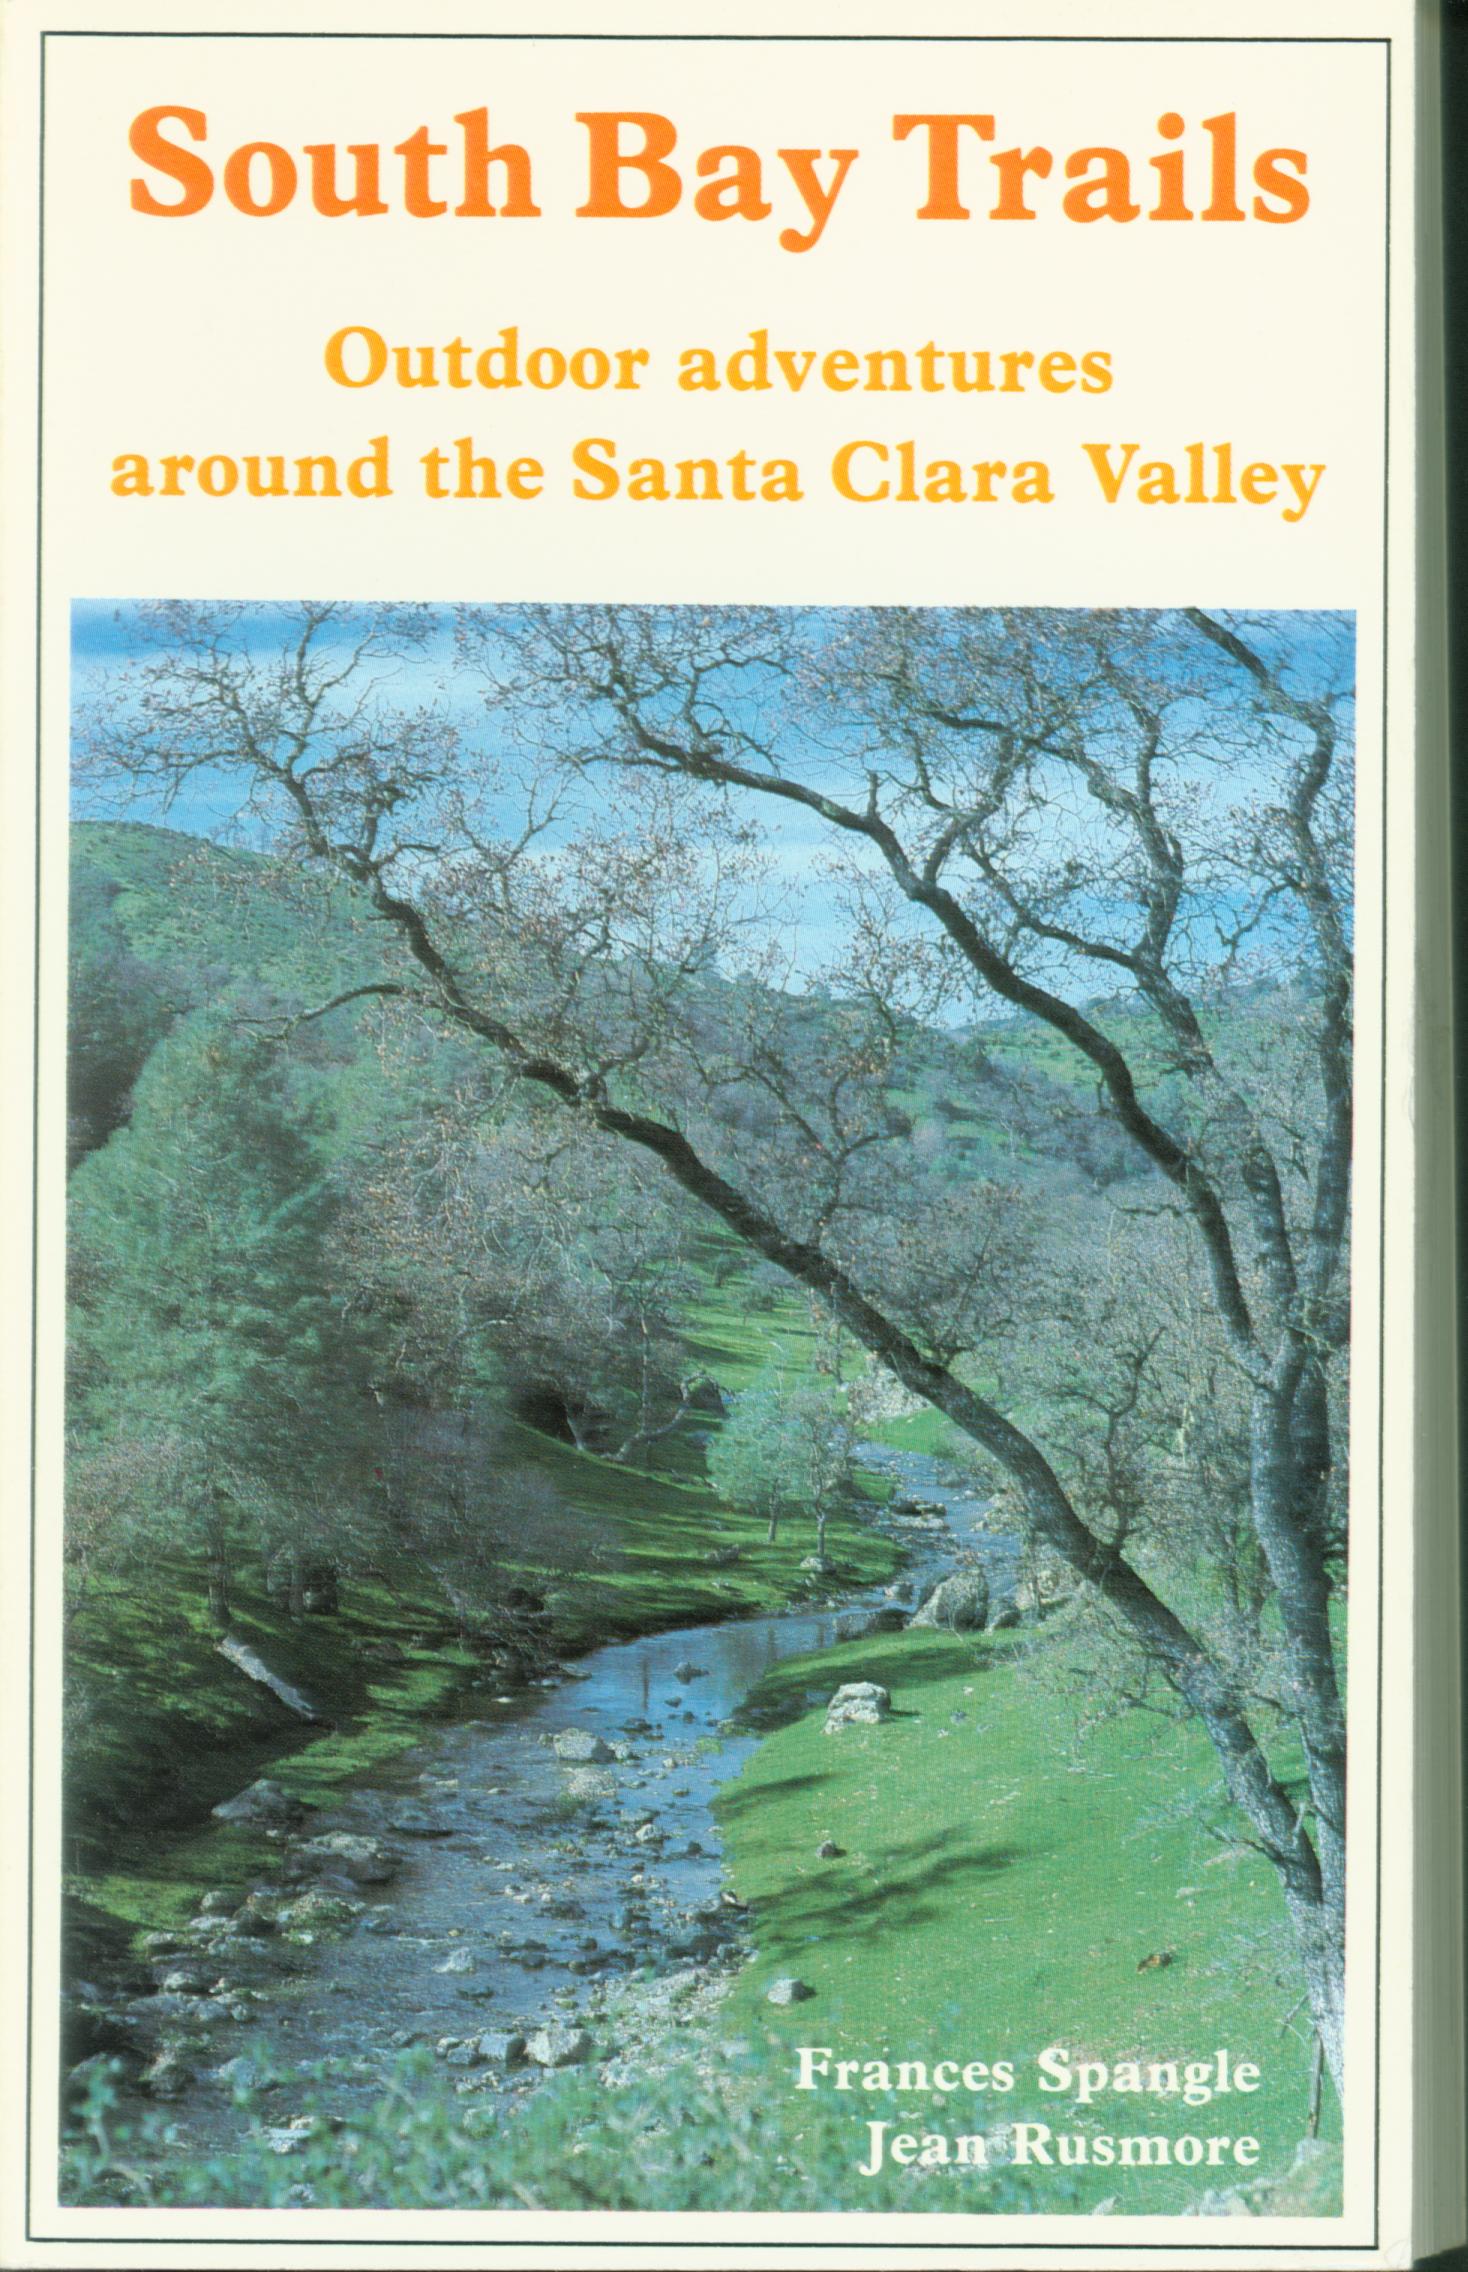 SOUTH BAY TRAILS: Outdoor adventures around the Santa Clara Valley.